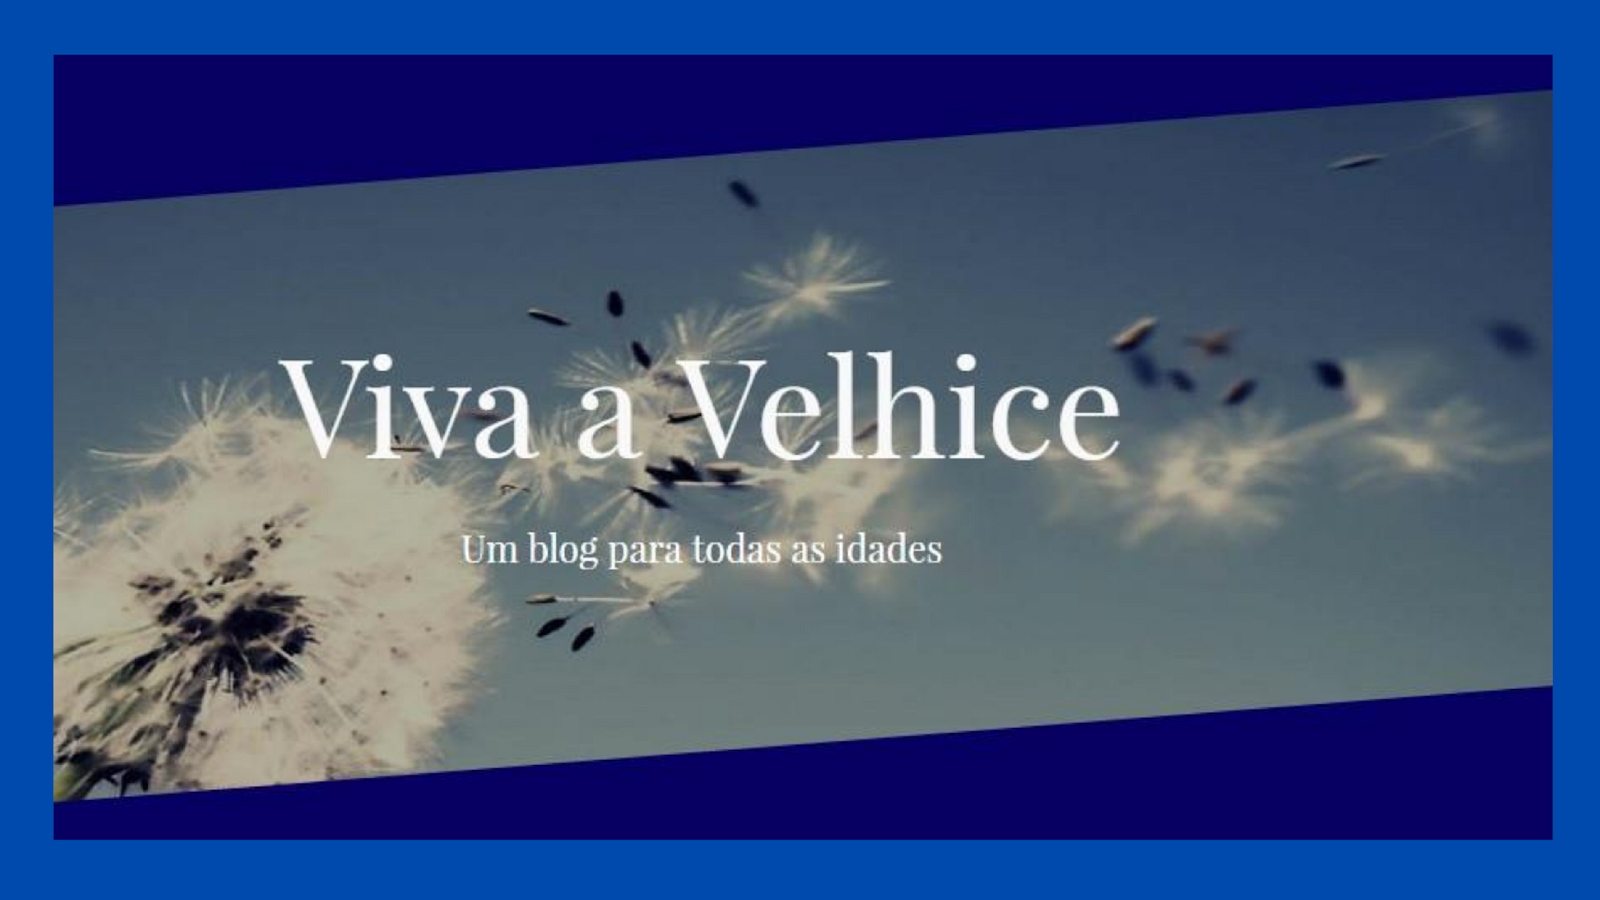 www.vivaavelhice.com